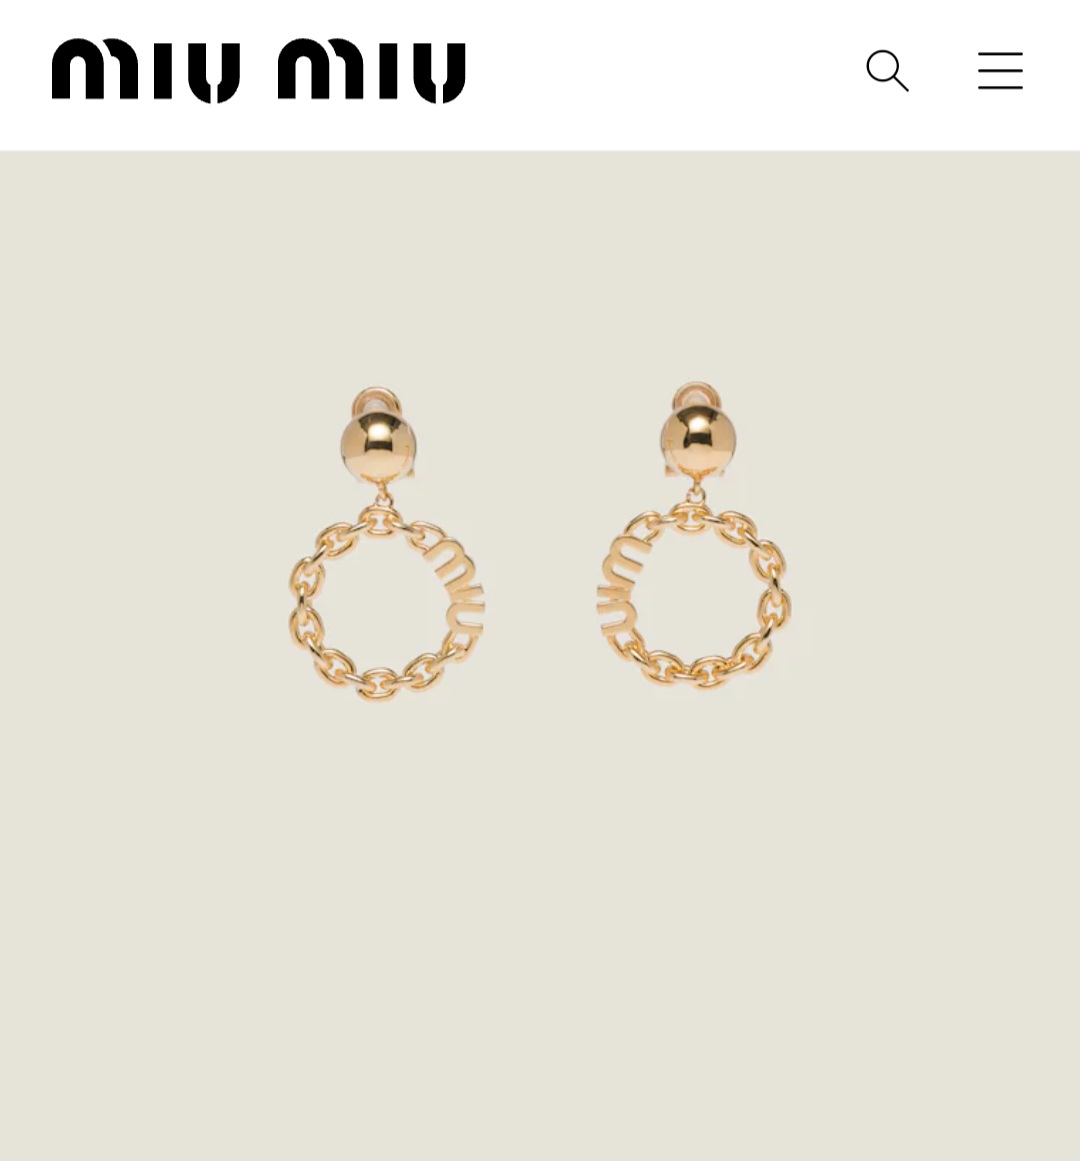 Miu Miu metal earrings